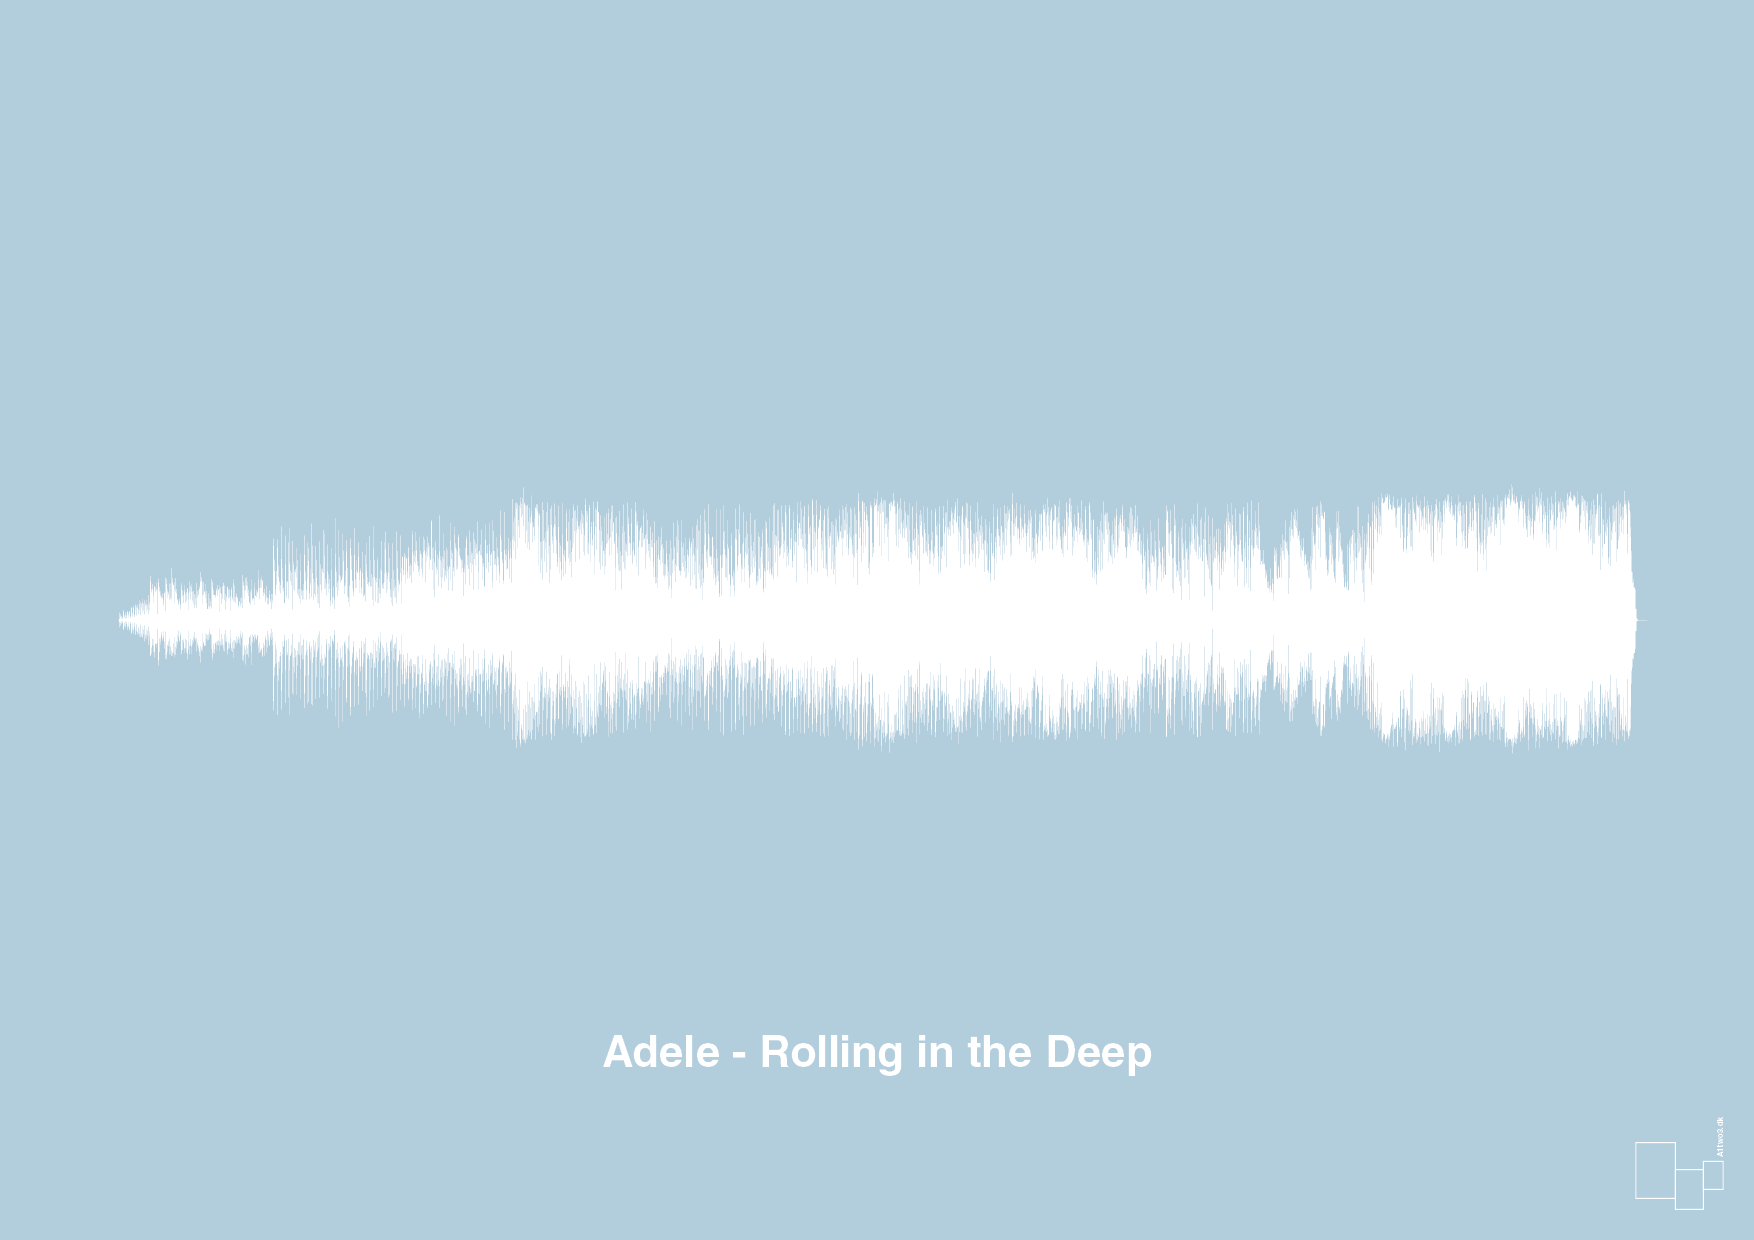 adele - rolling in the deep - Plakat med Musik i Heavenly Blue